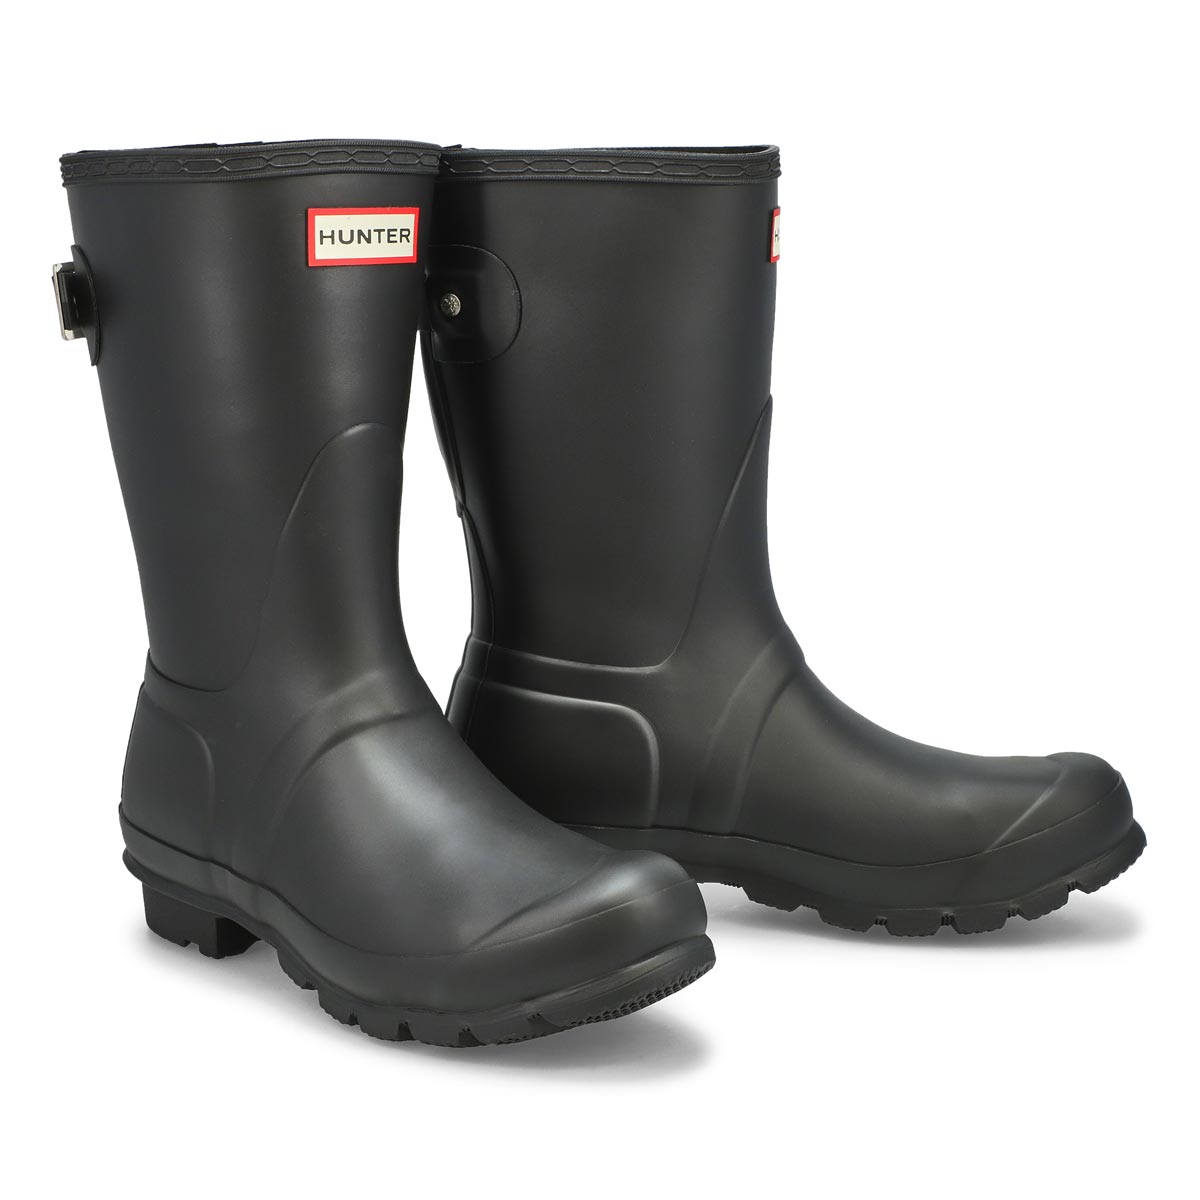 Hunter Women's ORIGINAL ADJUSTABLE SHORT black rain boots